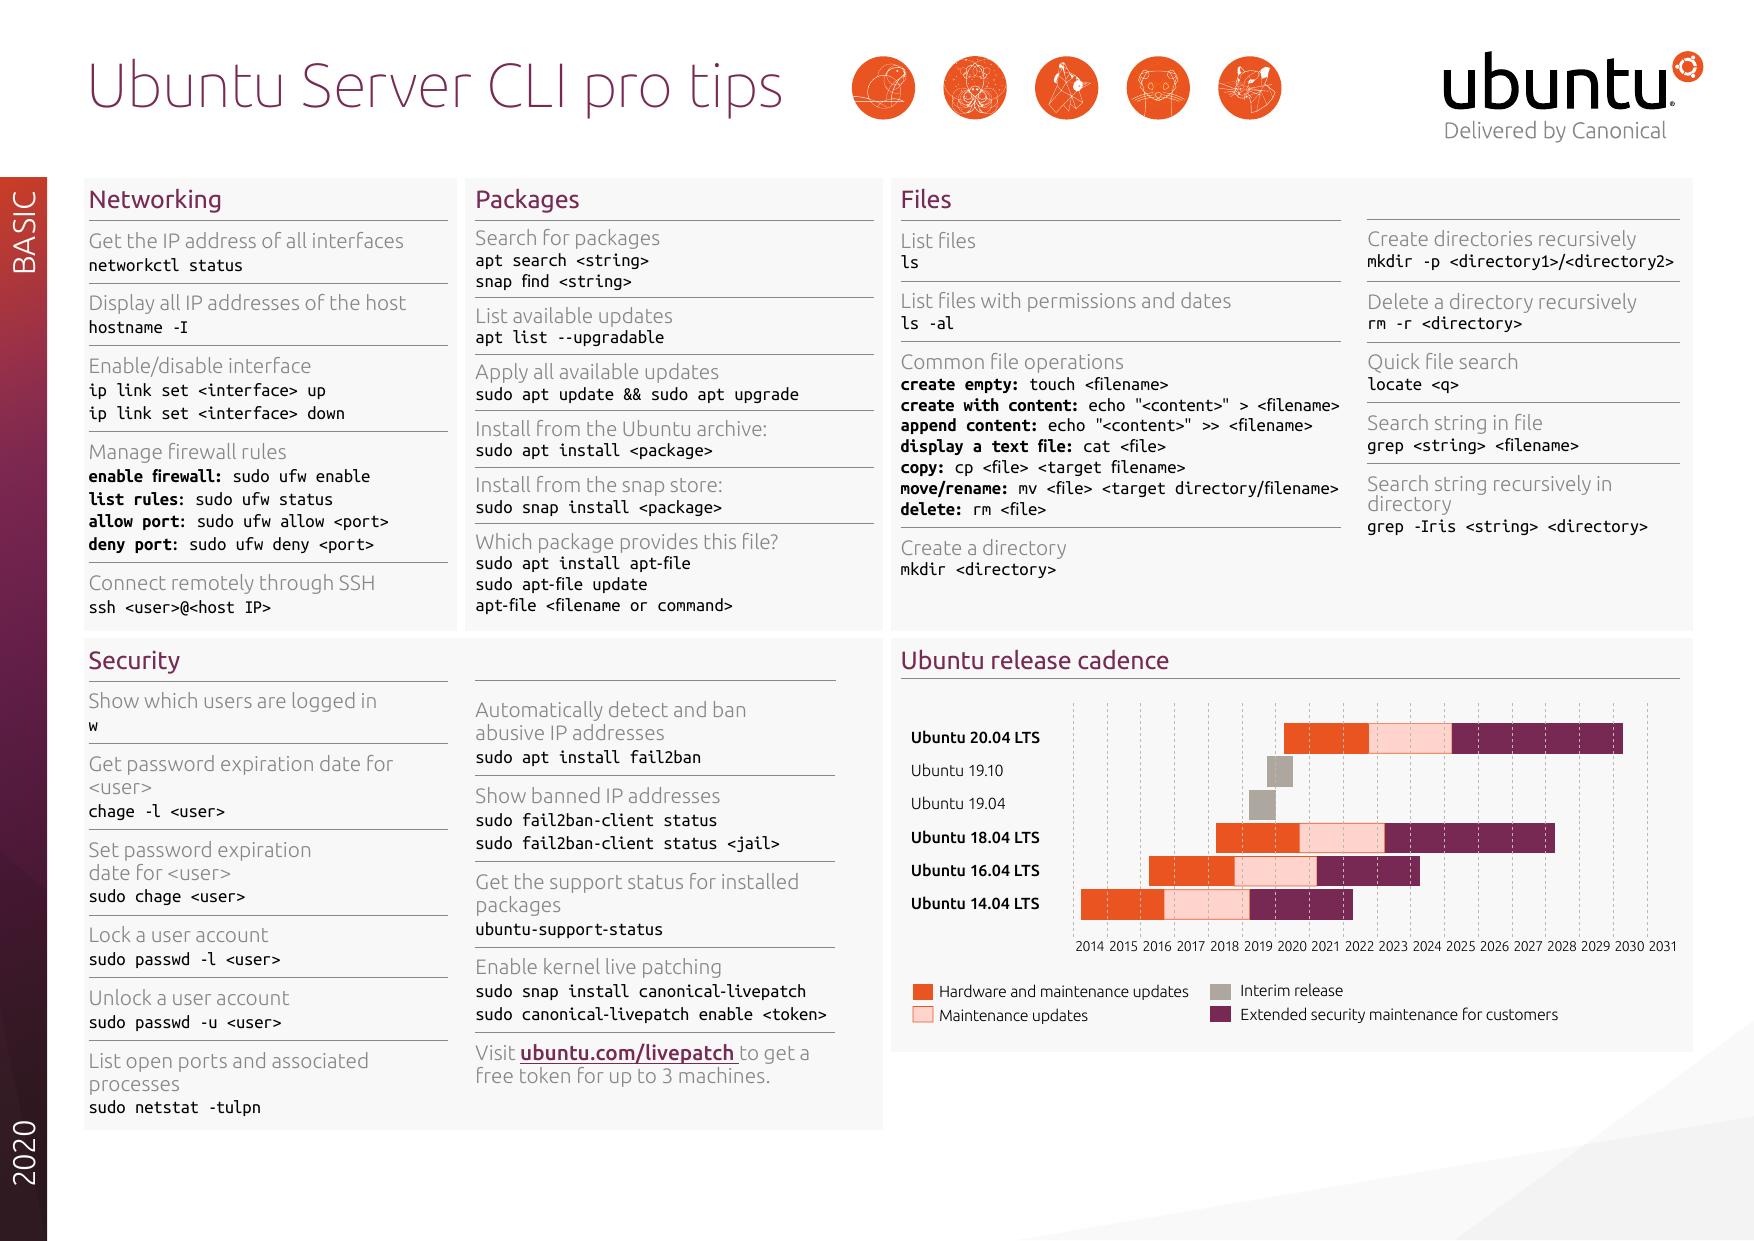 https://assets.ubuntu.com/v1/39a8dac8-Ubuntu_Server_CLI_pro_tips_2020-04.jpg